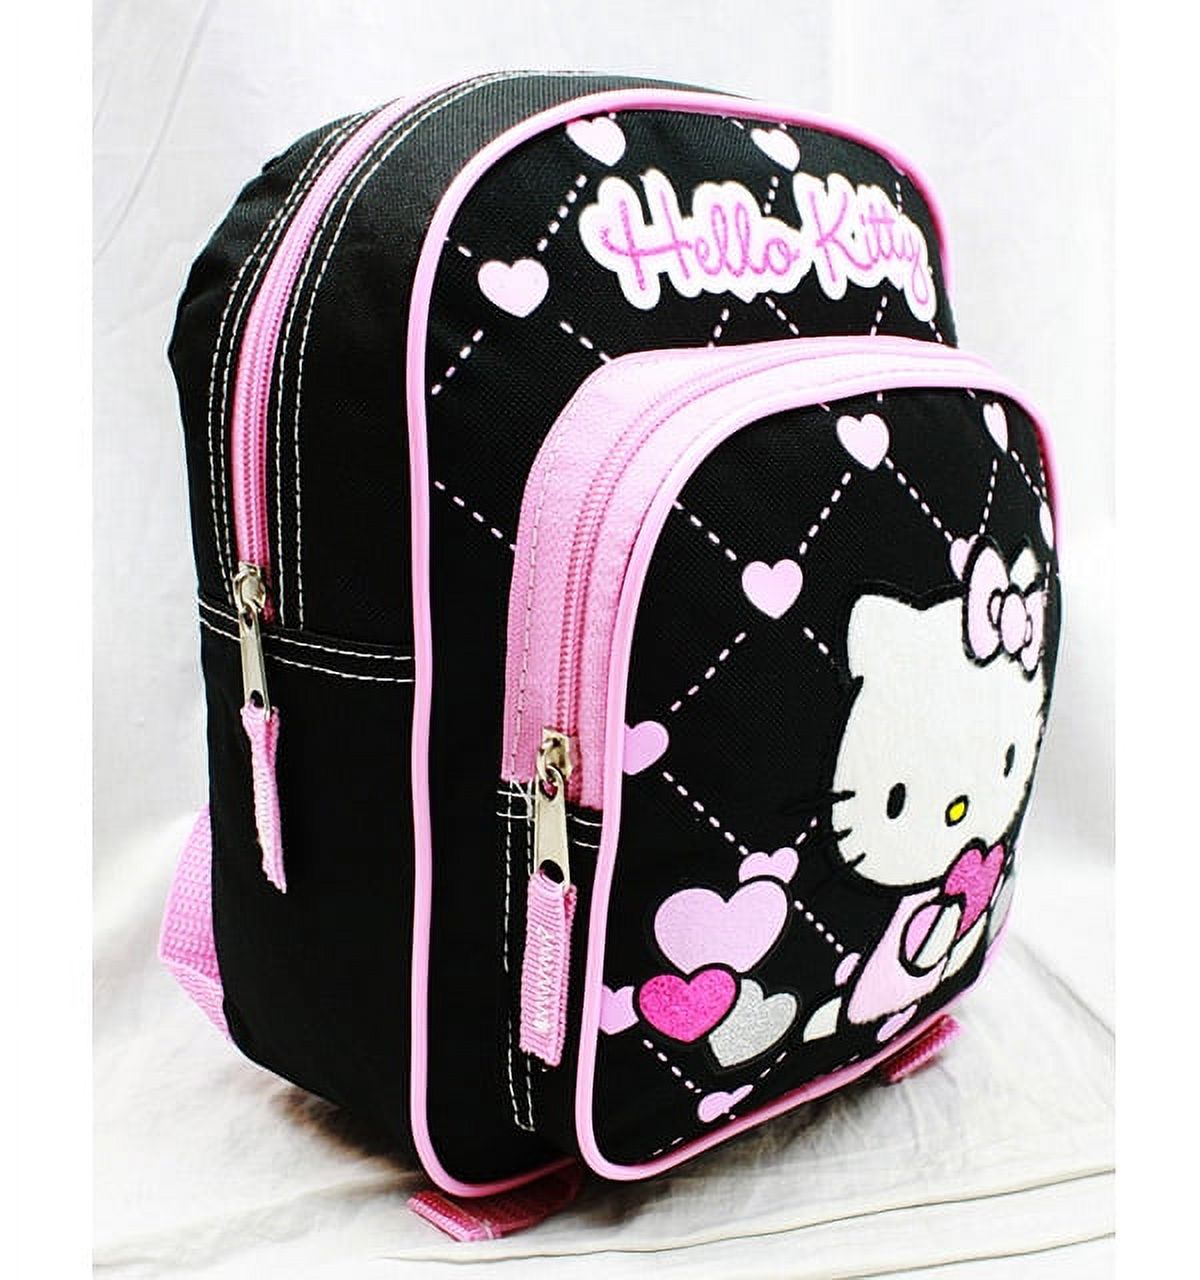 Mini Backpack - - Glitter Heart Black School Bag 10 New 83073 - image 2 of 3